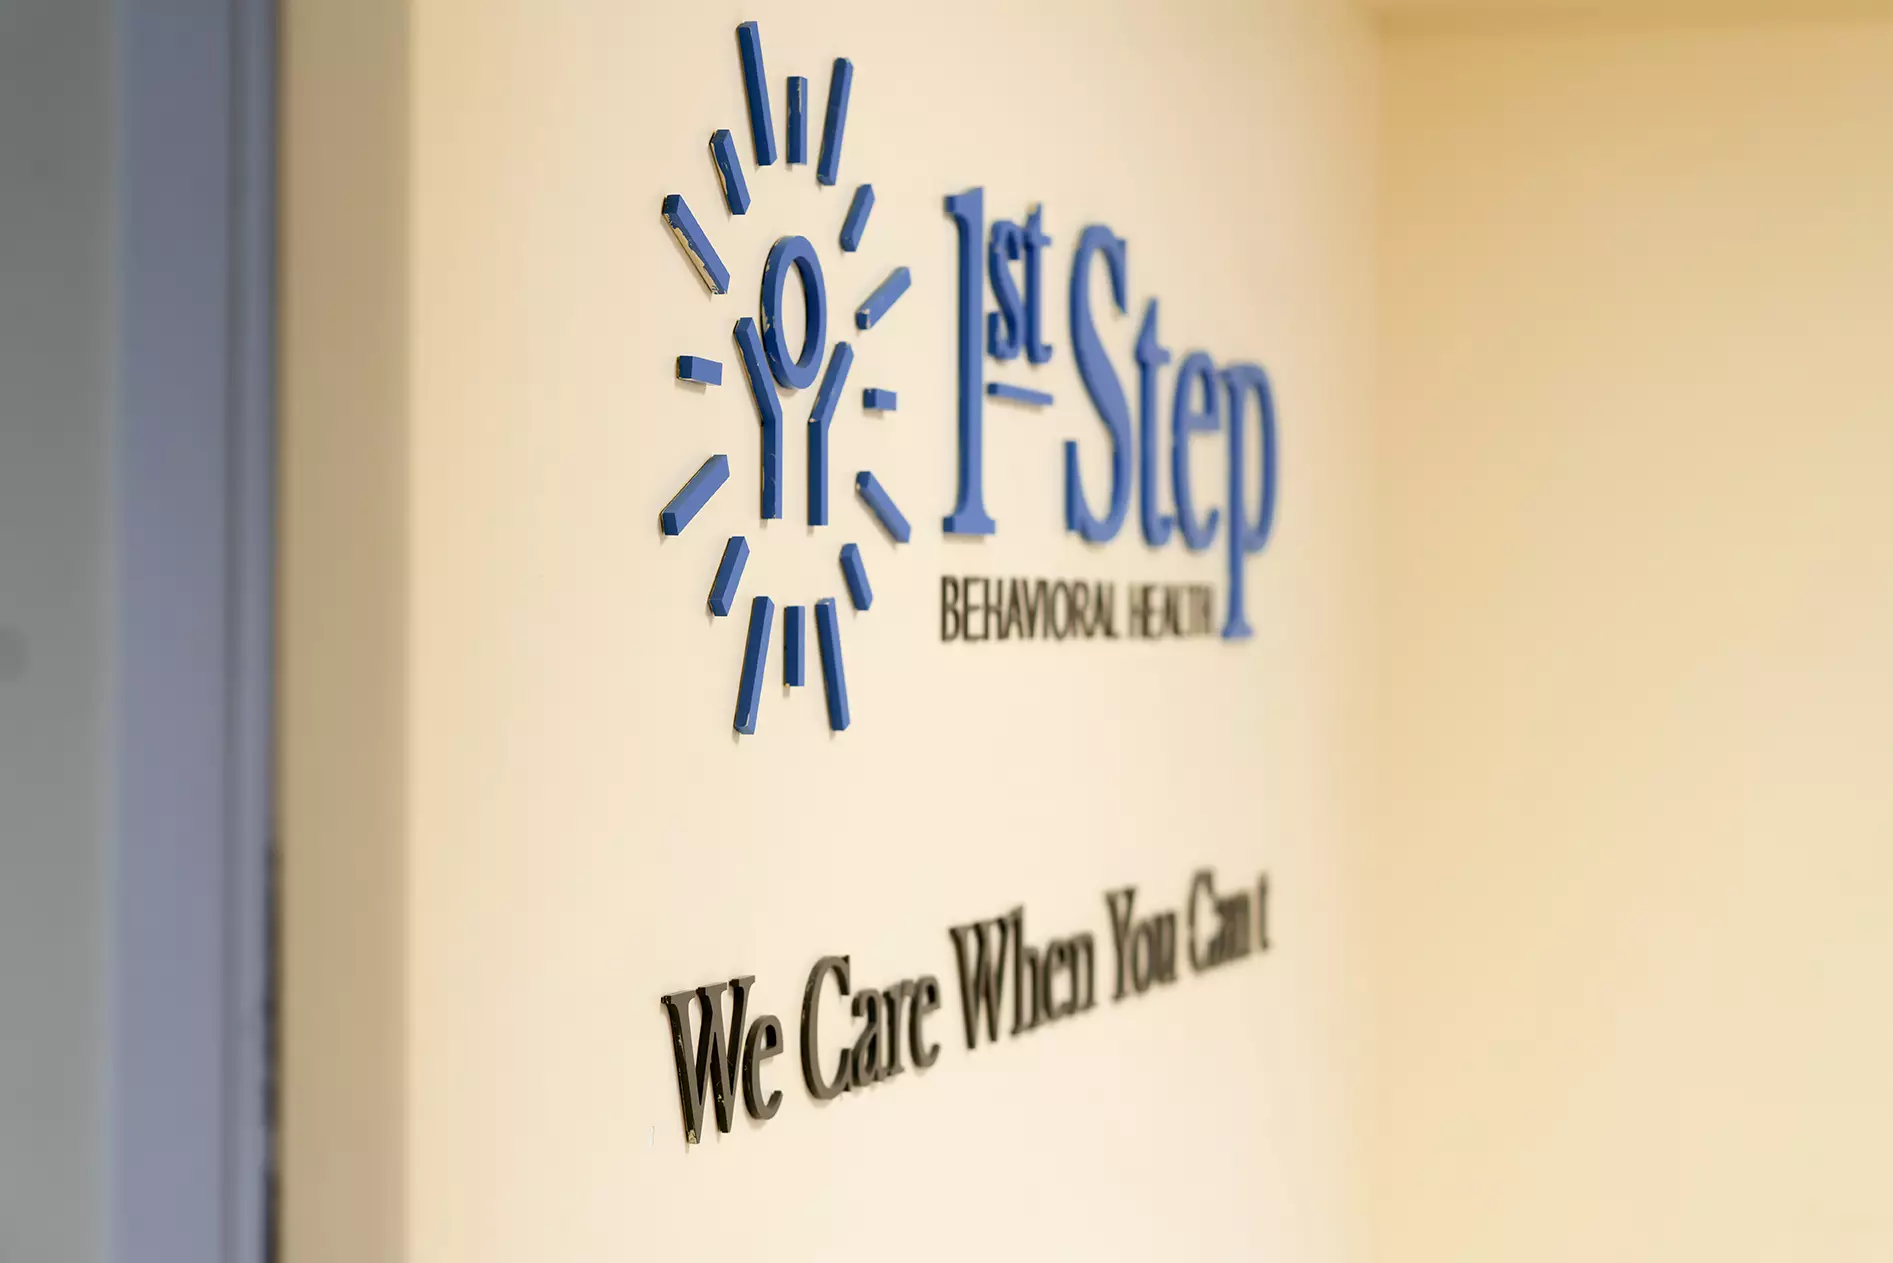 1st step logo on addiction treatment center wall